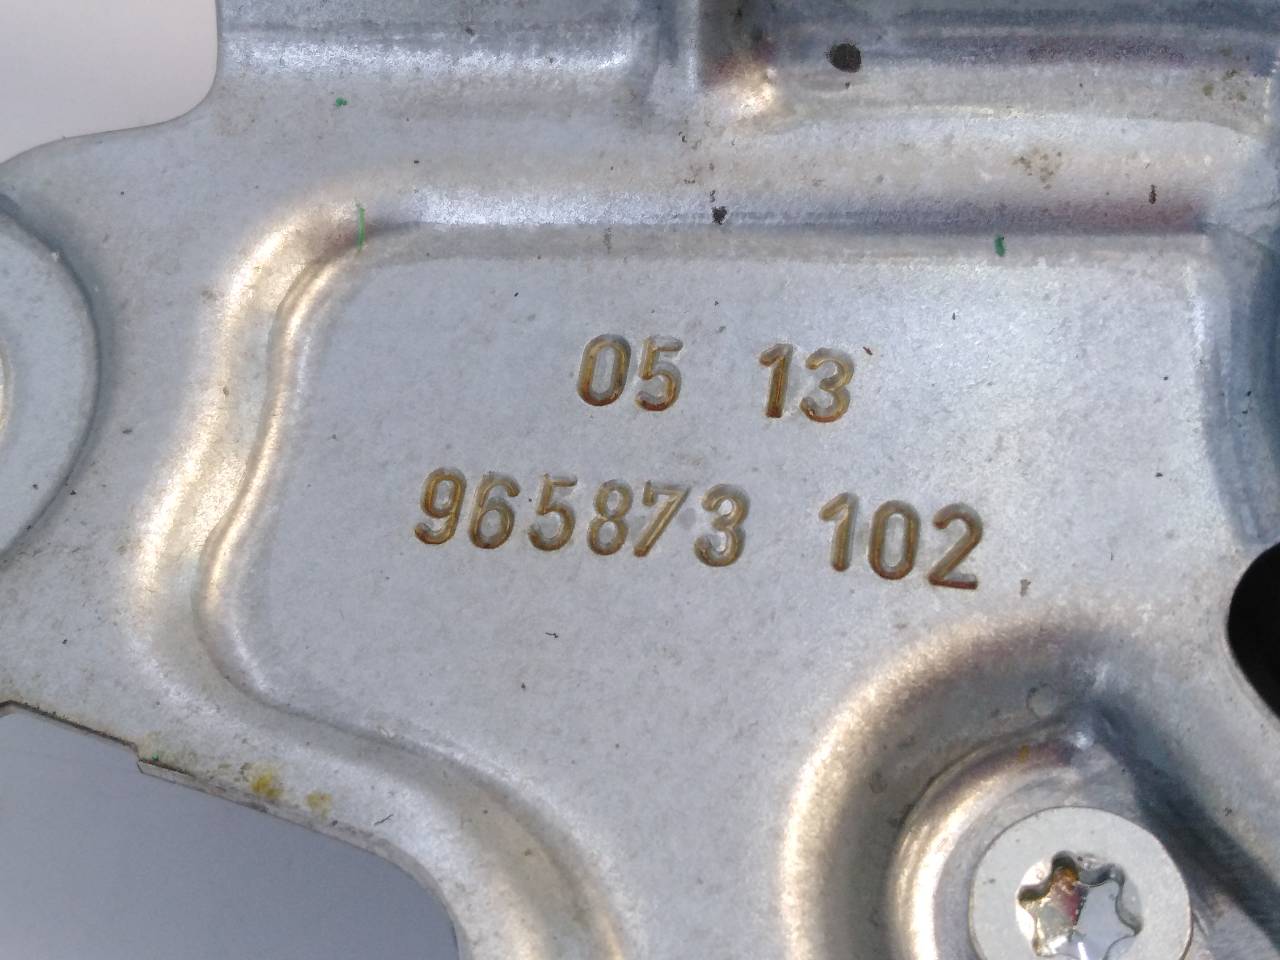 OPEL Insignia A (2008-2016) Стеклоподъемник передней правой двери 965873102, E2-B6-10-2 18590857